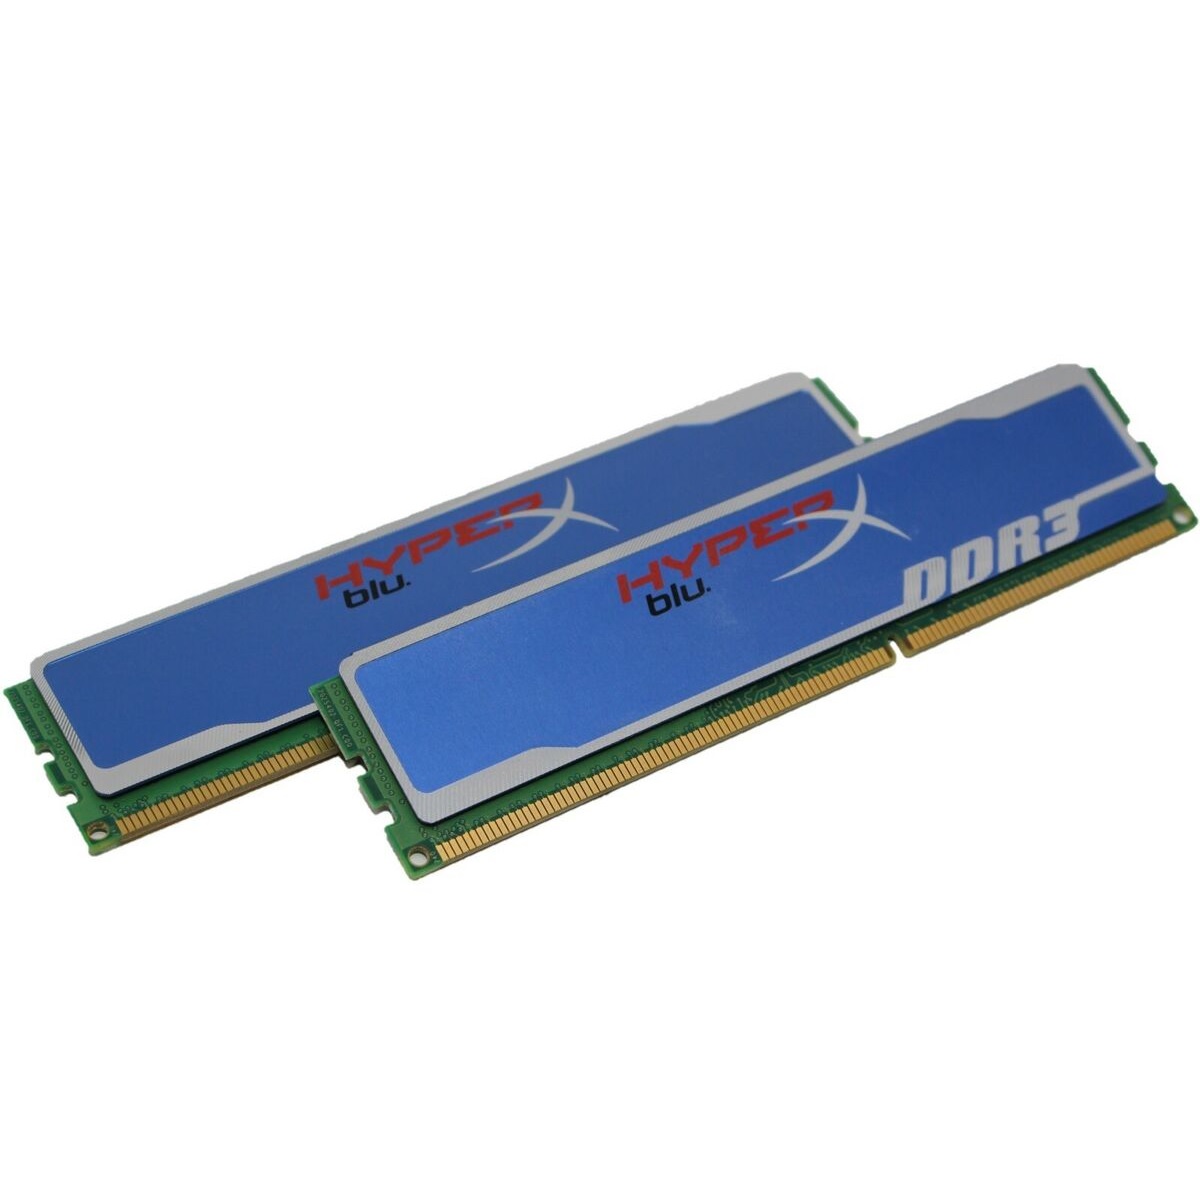 Kingston - Kingston HyperX Blu 4GB (2x2GB) DDR3 PC3-12800C9 1600MHz Dual Channel Kit (